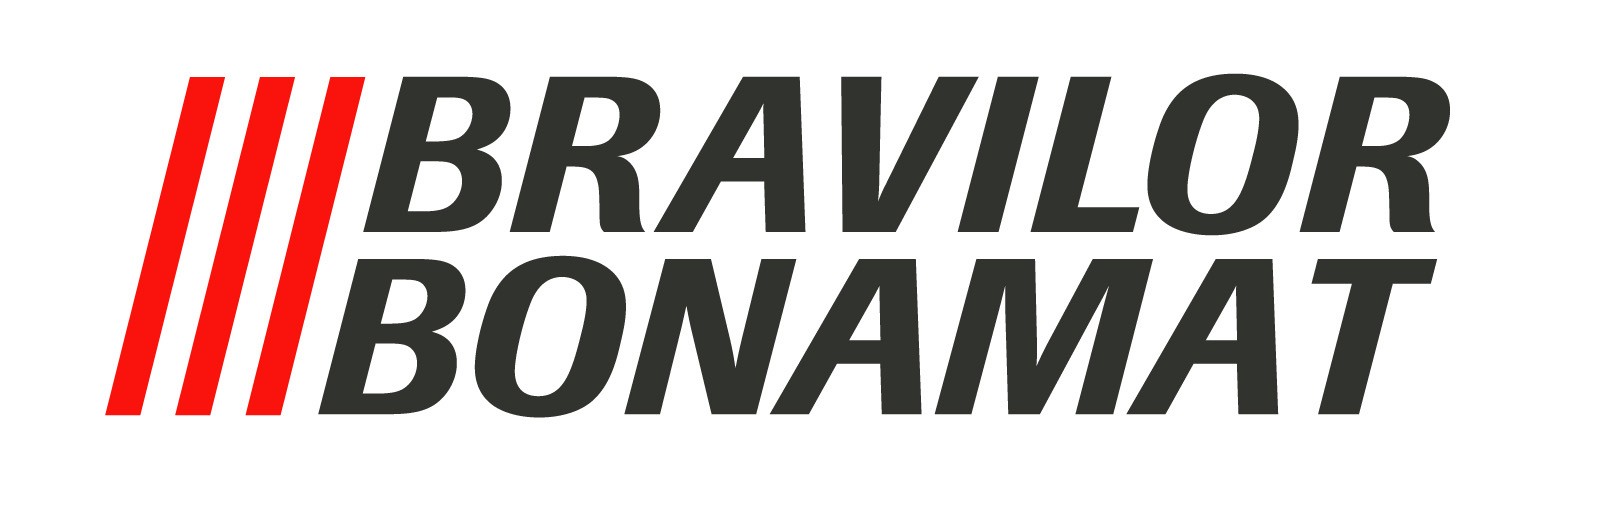 bravilor_bonamat_logo_1.jpg